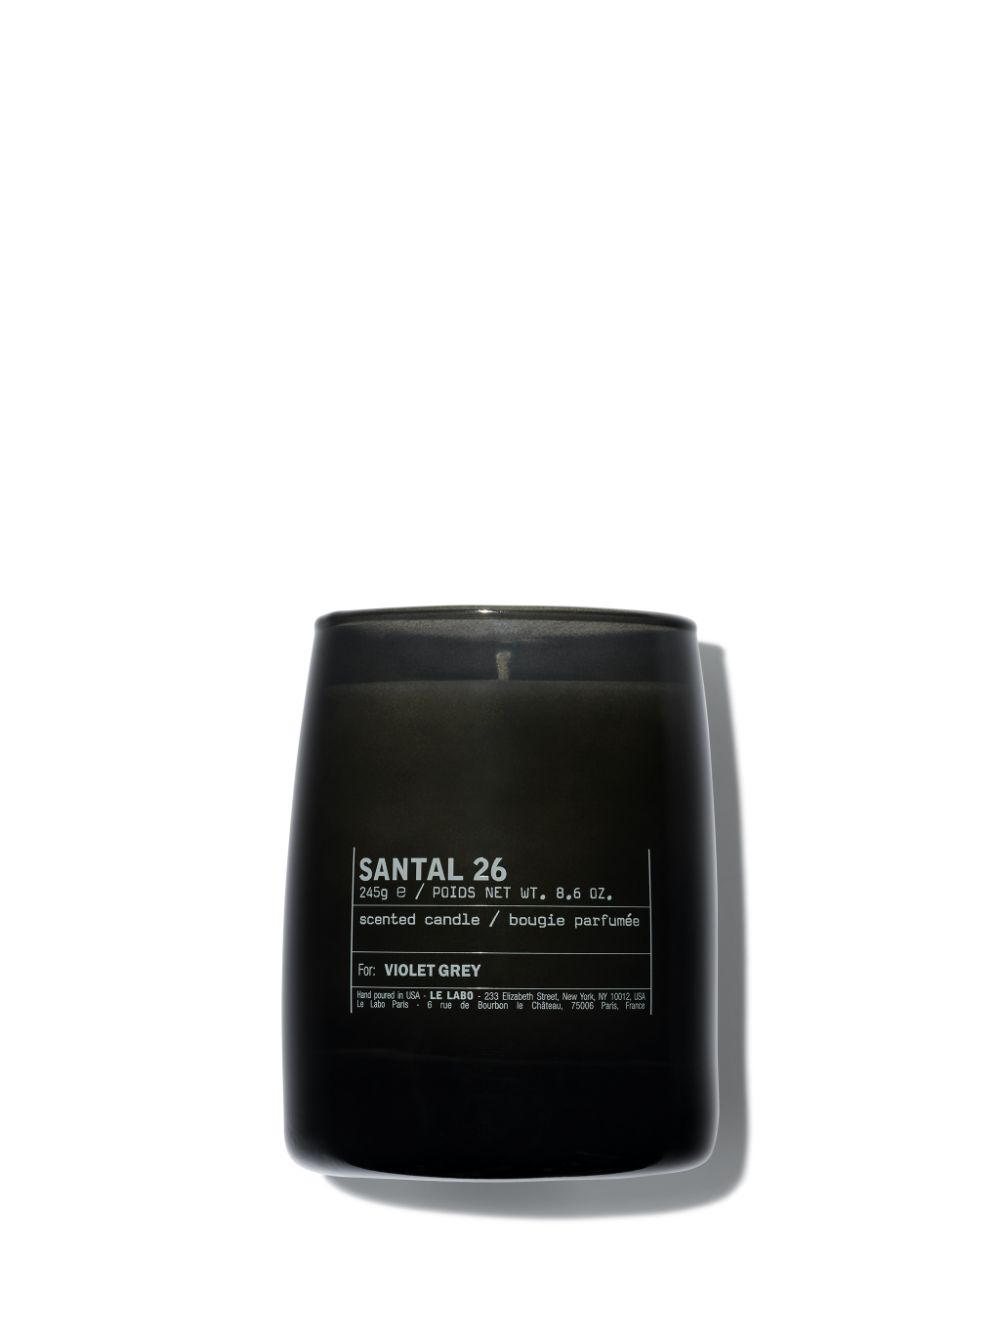 Le Labo Santal 26 Classic Candle for Violet Grey | Violet Grey